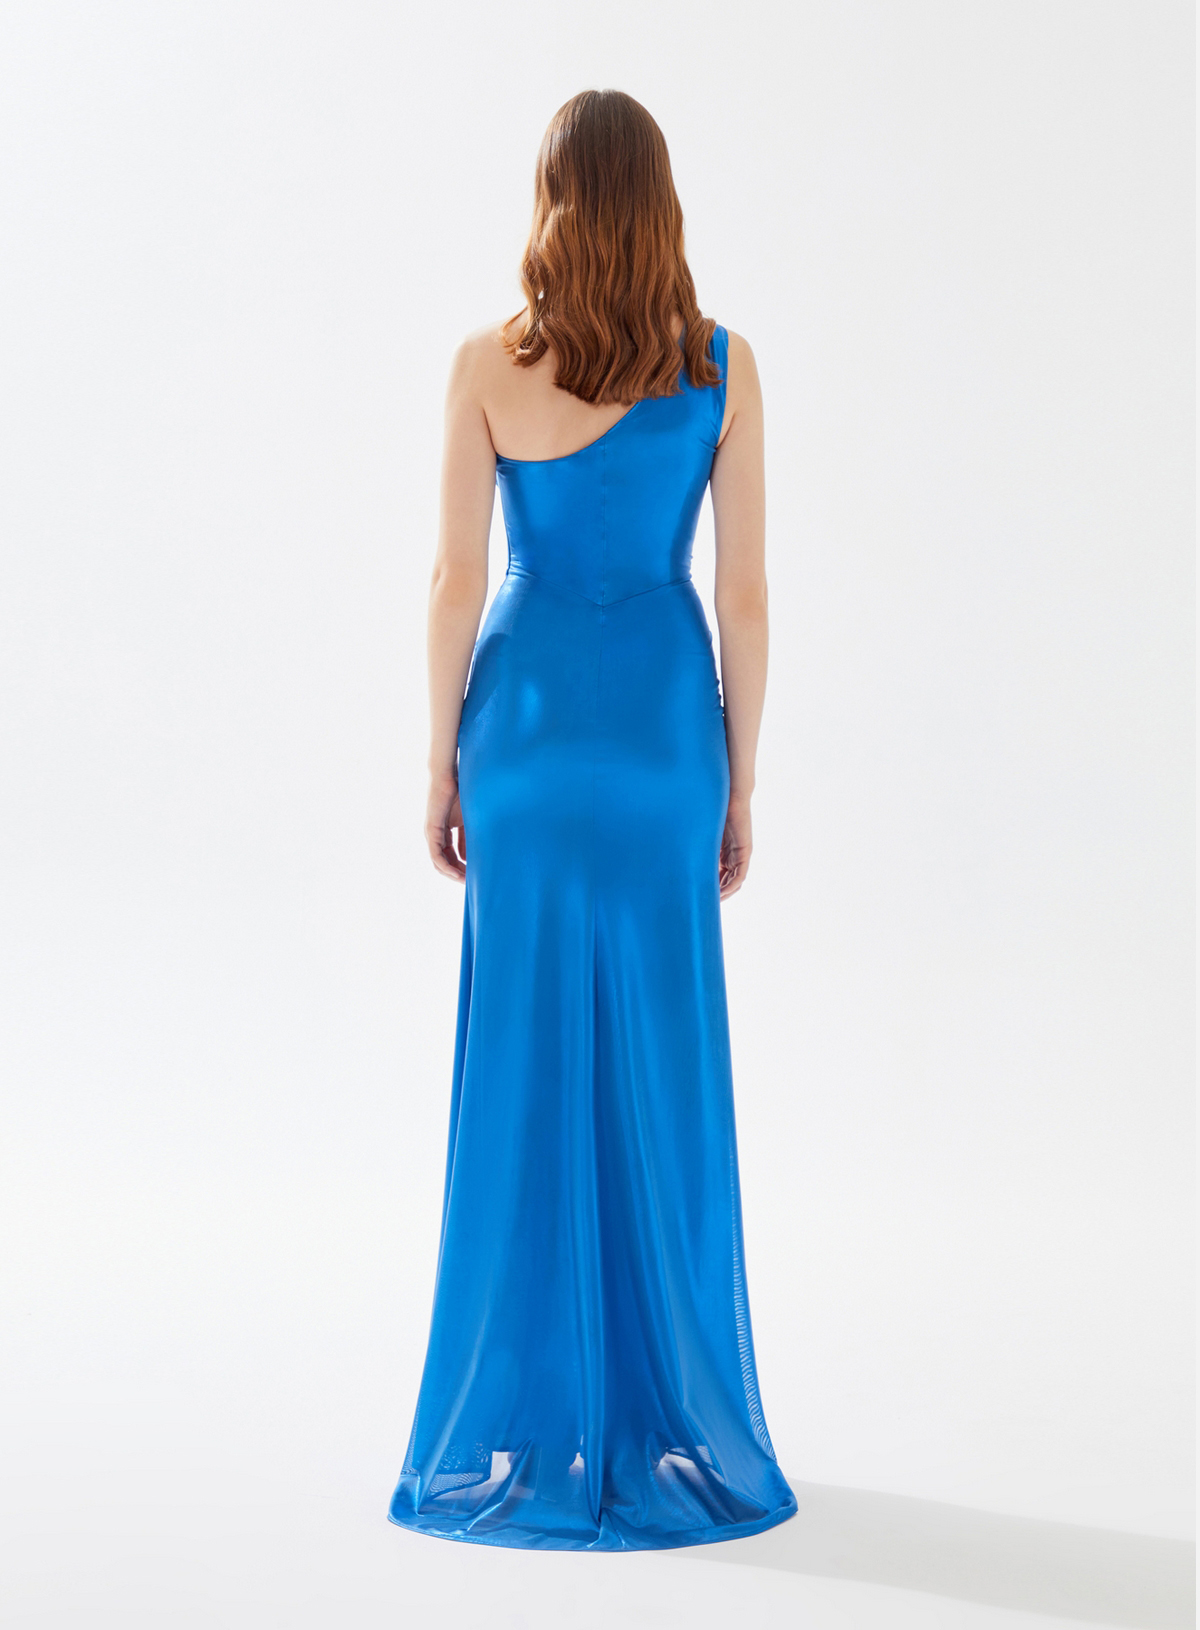 Picture of Marlyn Bıjou Blue Dress